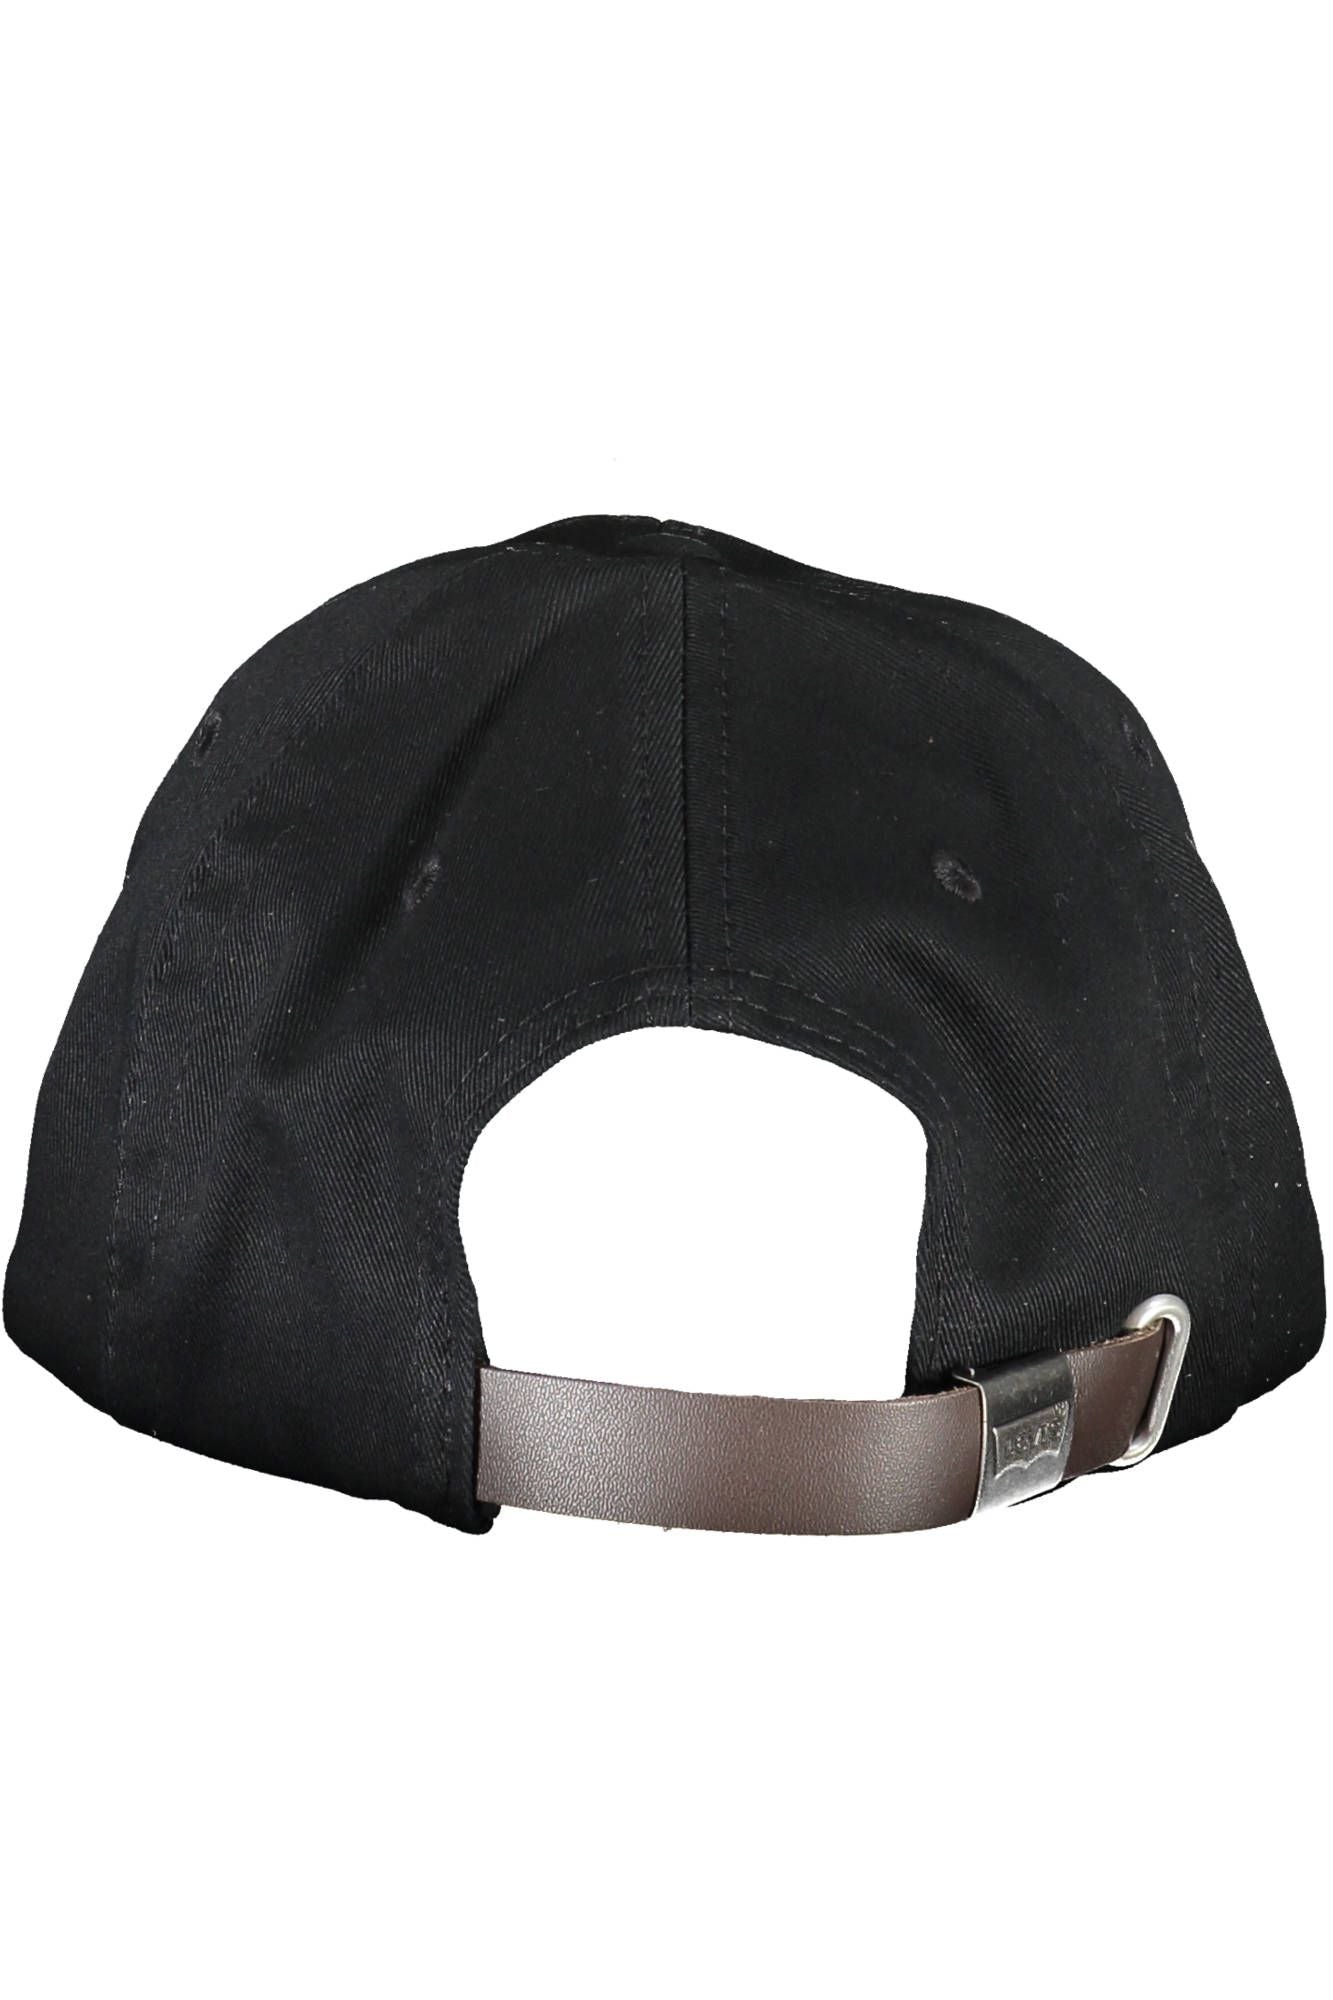 Sleek Black Cotton Cap with Logo Visor